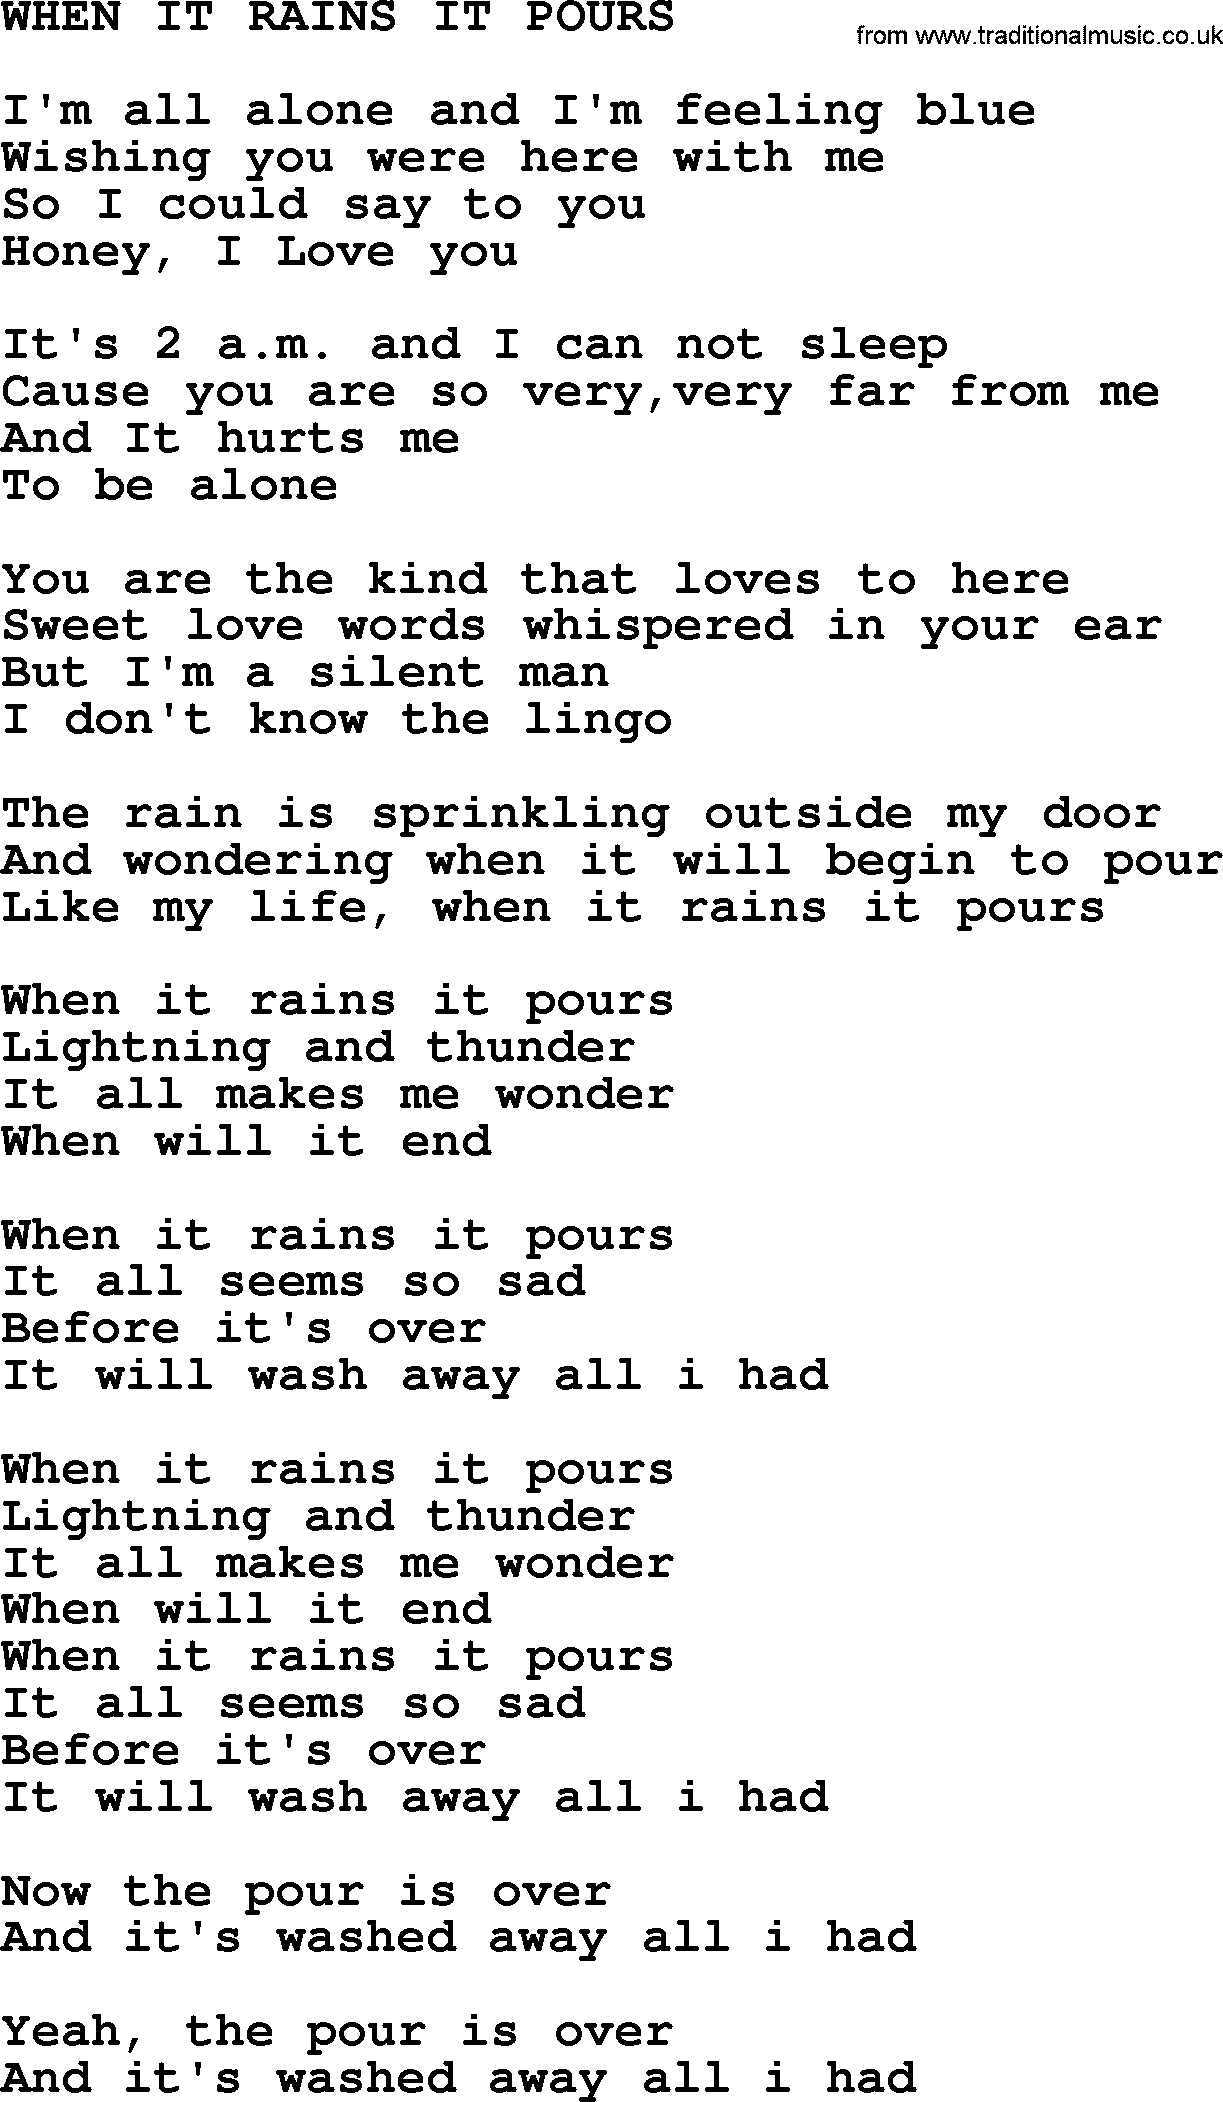 Merle Haggard song: When It Rains It Pours, lyrics.